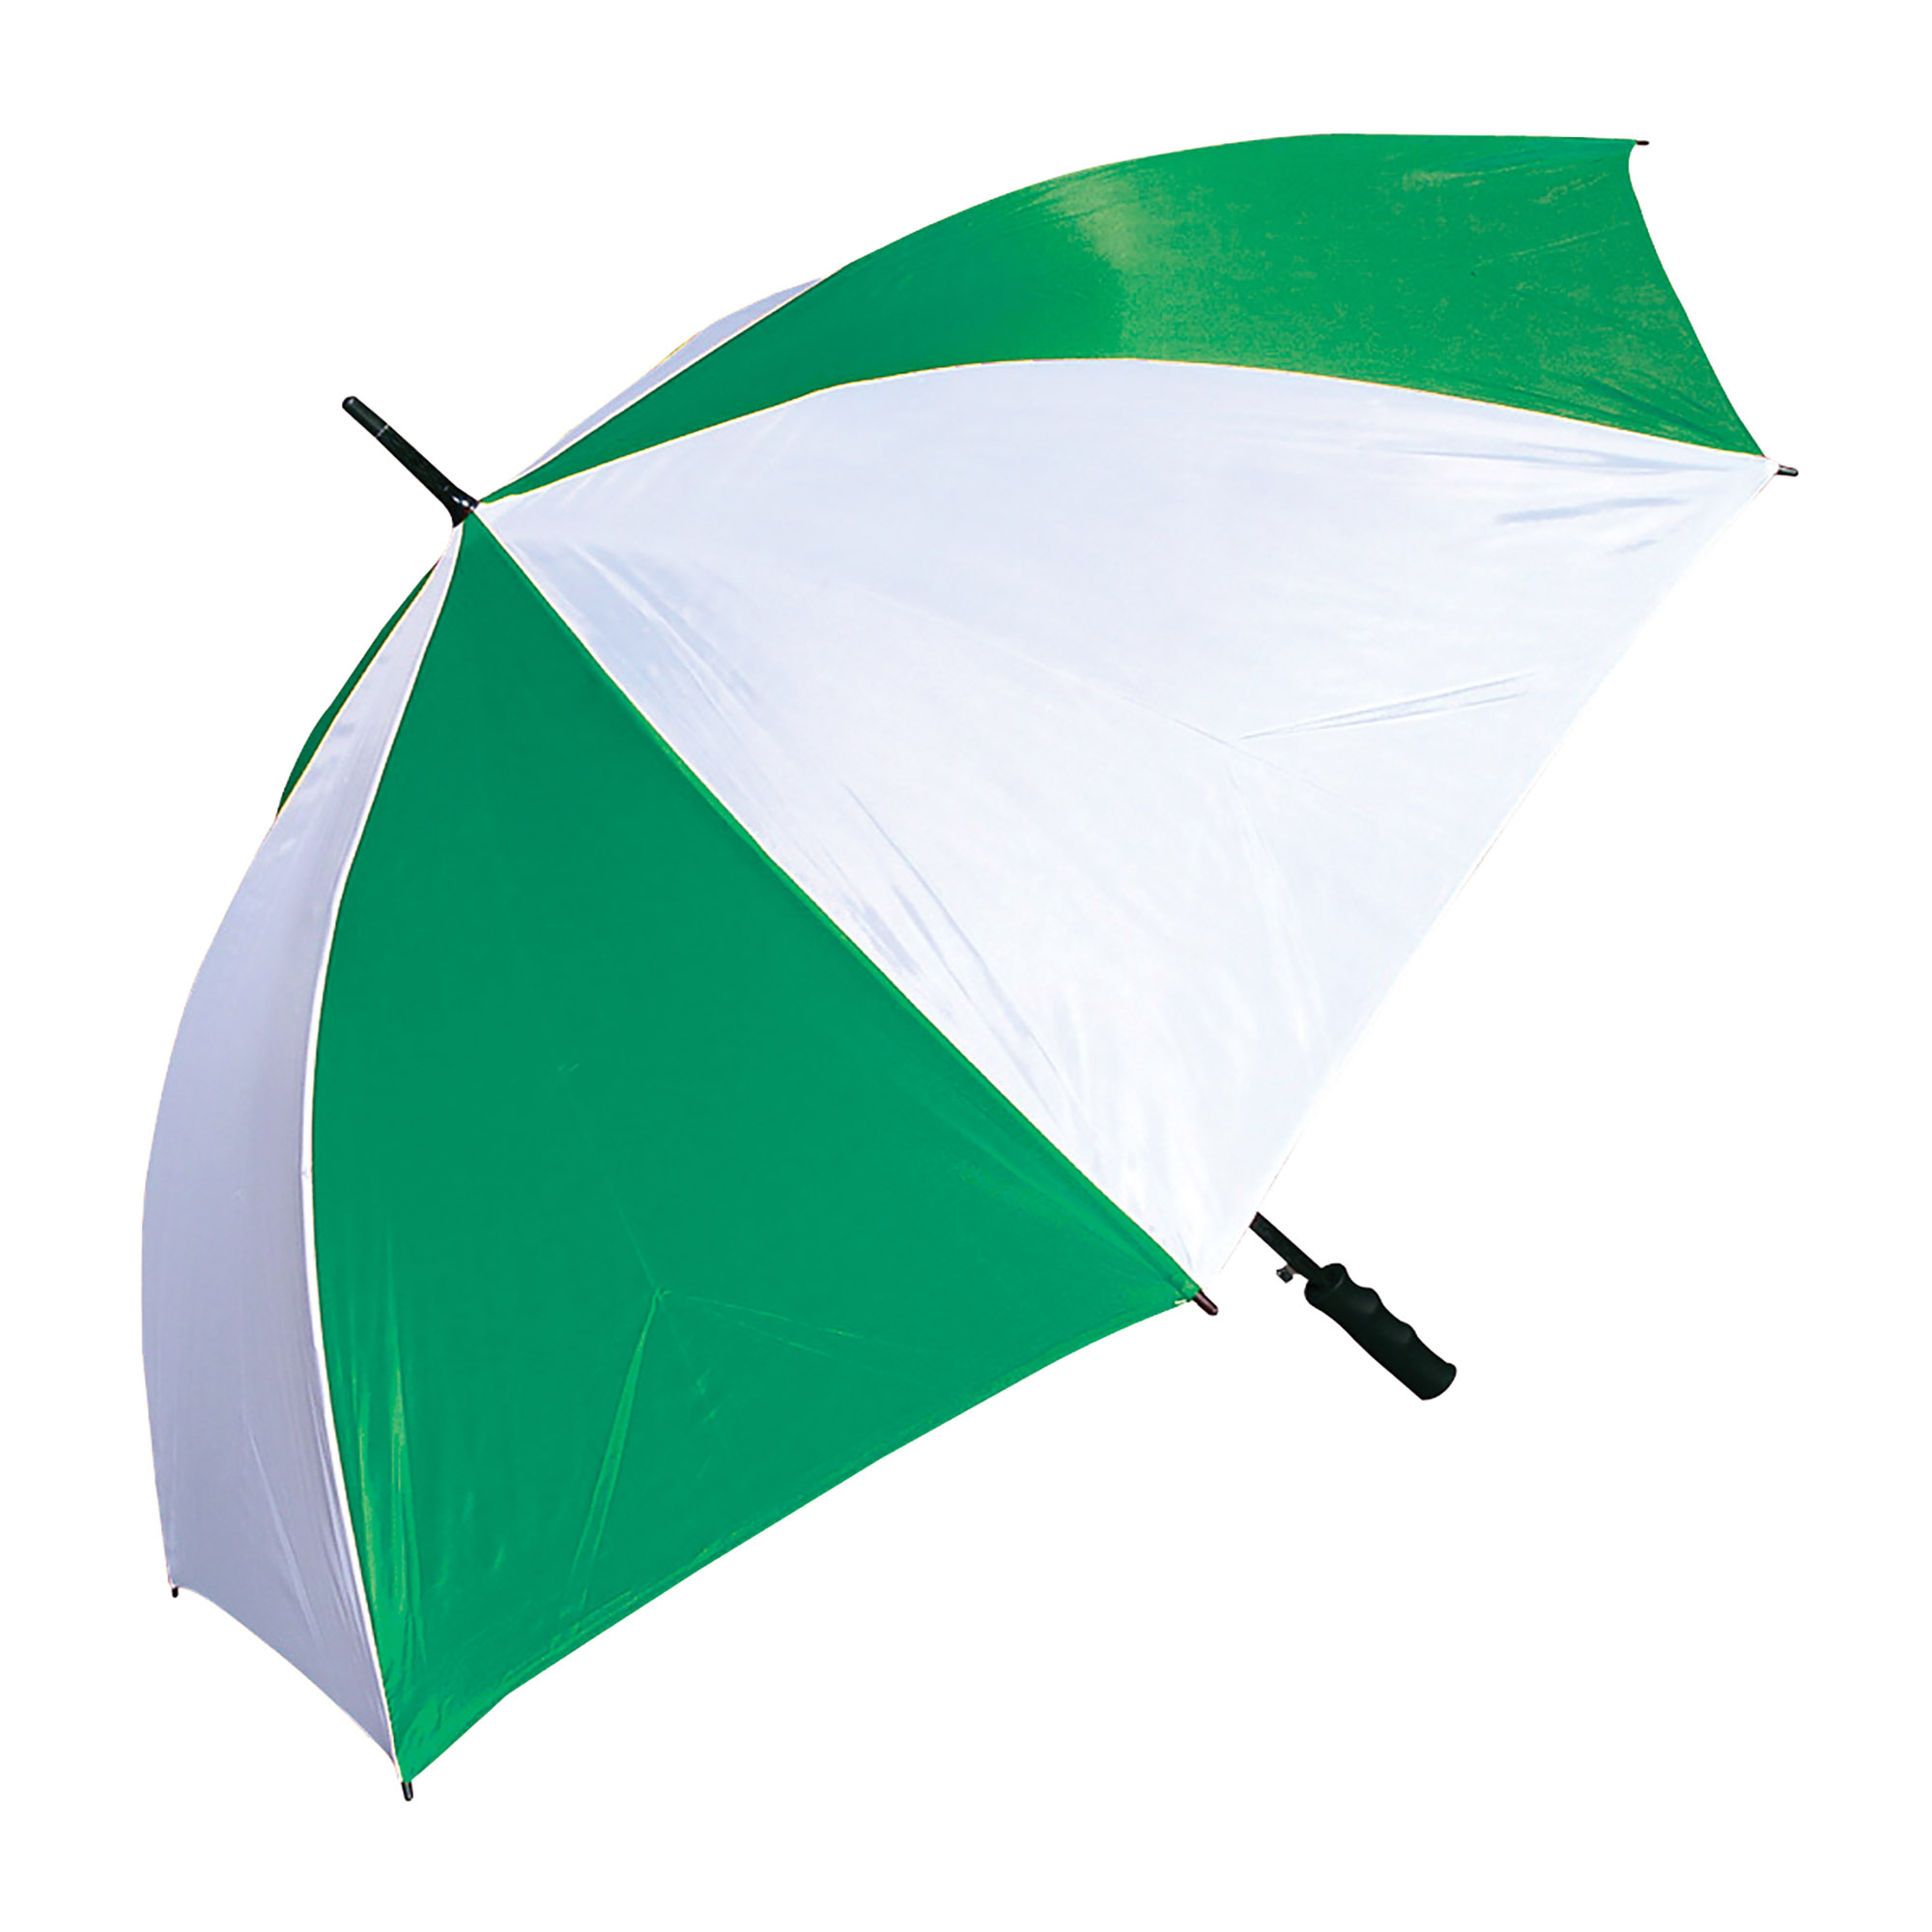 Bulk Promotional Green And White Sands Umbrella Online In Perth Australia